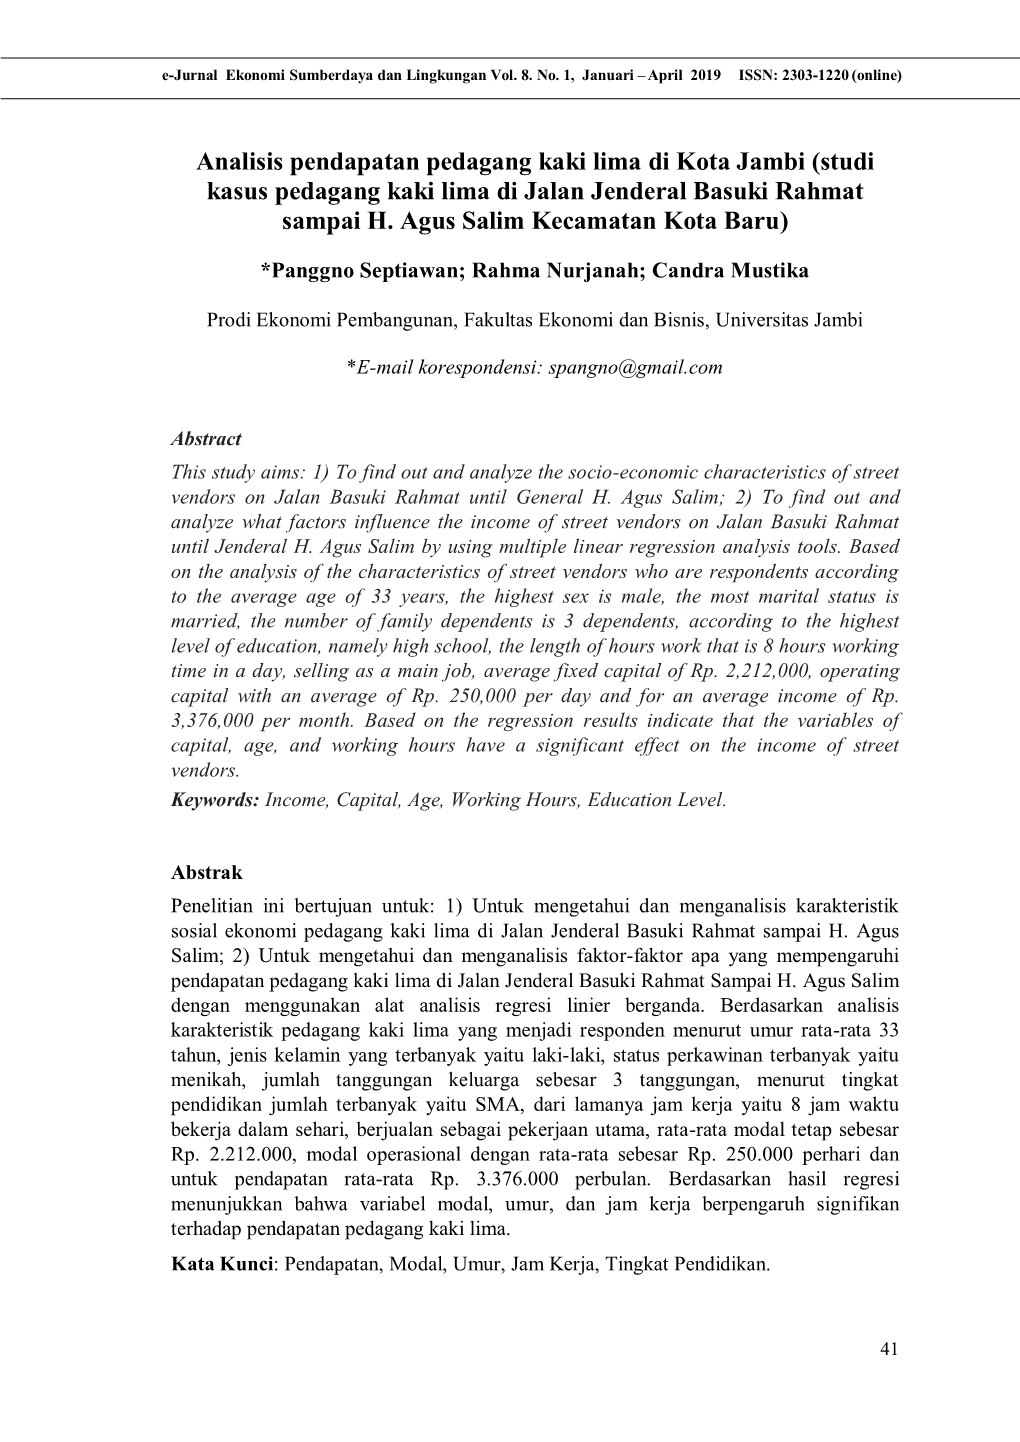 Analisis Pendapatan Pedagang Kaki Lima Di Kota Jambi (Studi Kasus Pedagang Kaki Lima Di Jalan Jenderal Basuki Rahmat Sampai H